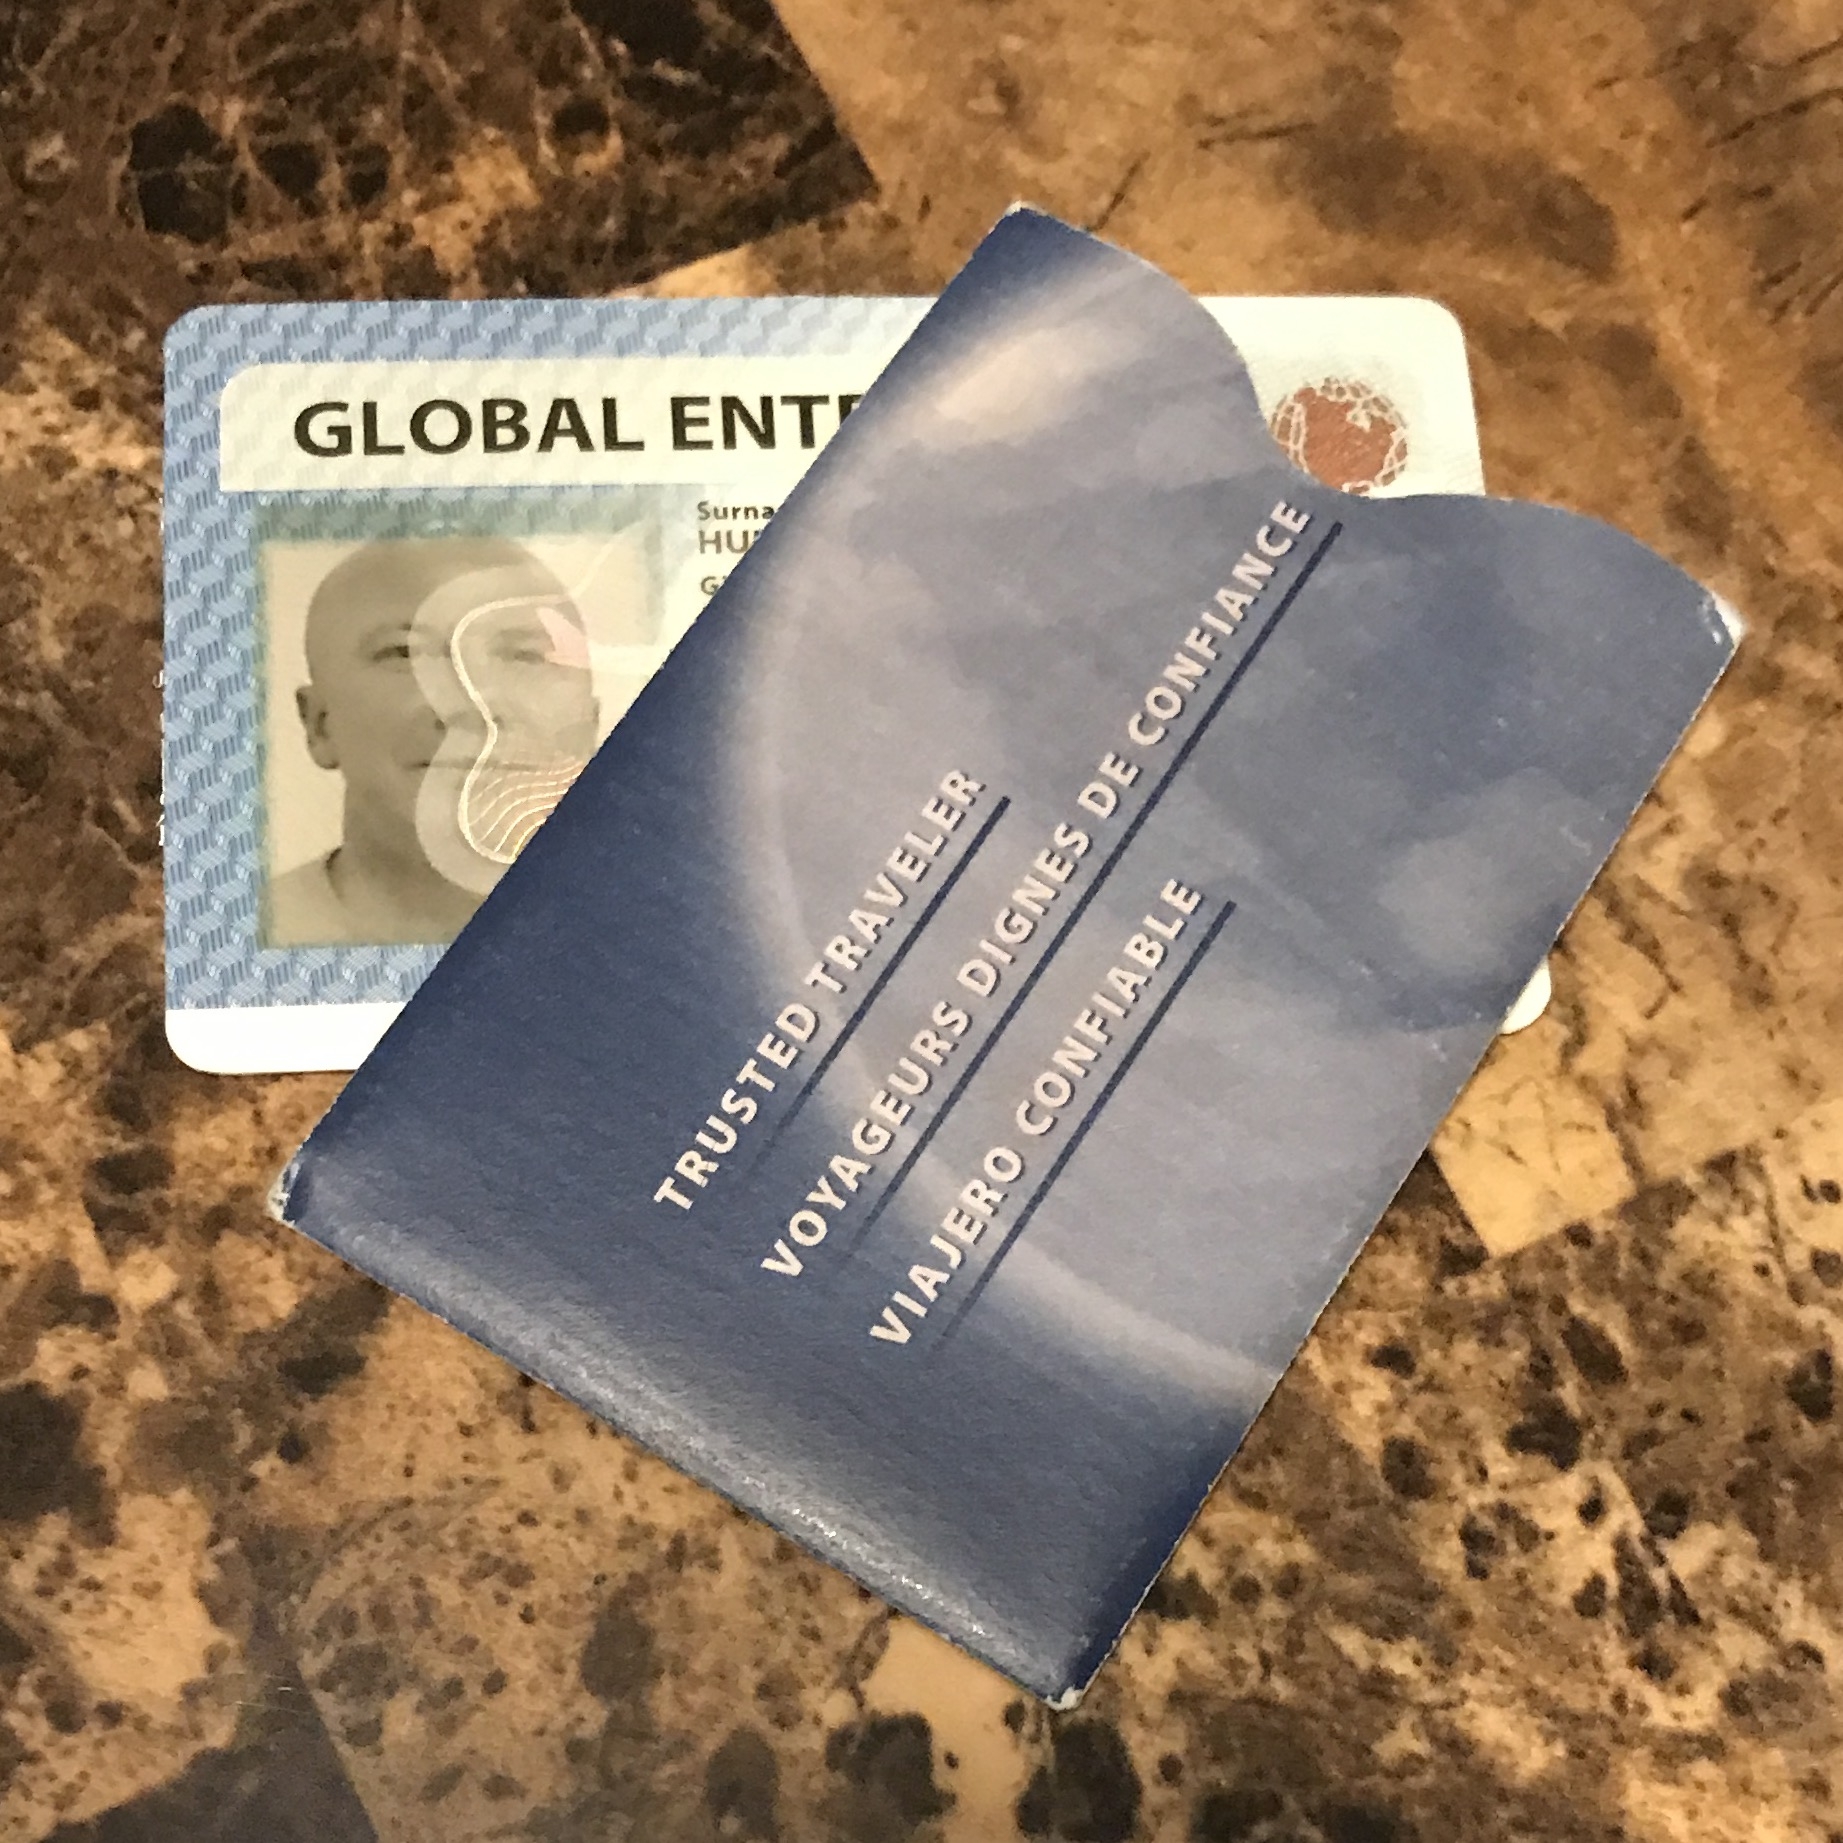 updating global entry new passport